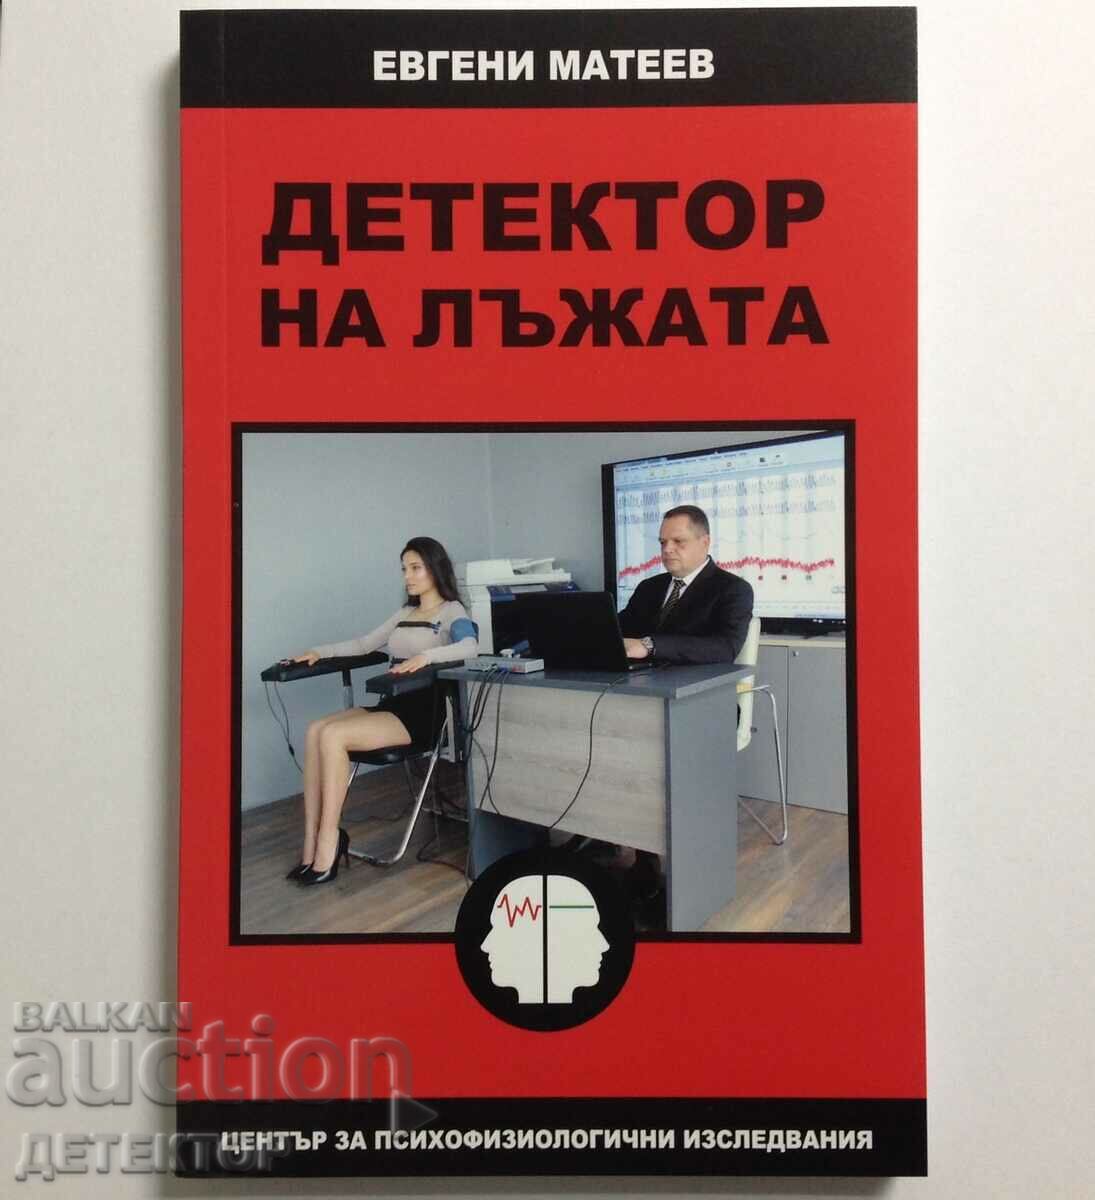 LIE DETECTOR by Evgeni Mateev, new book